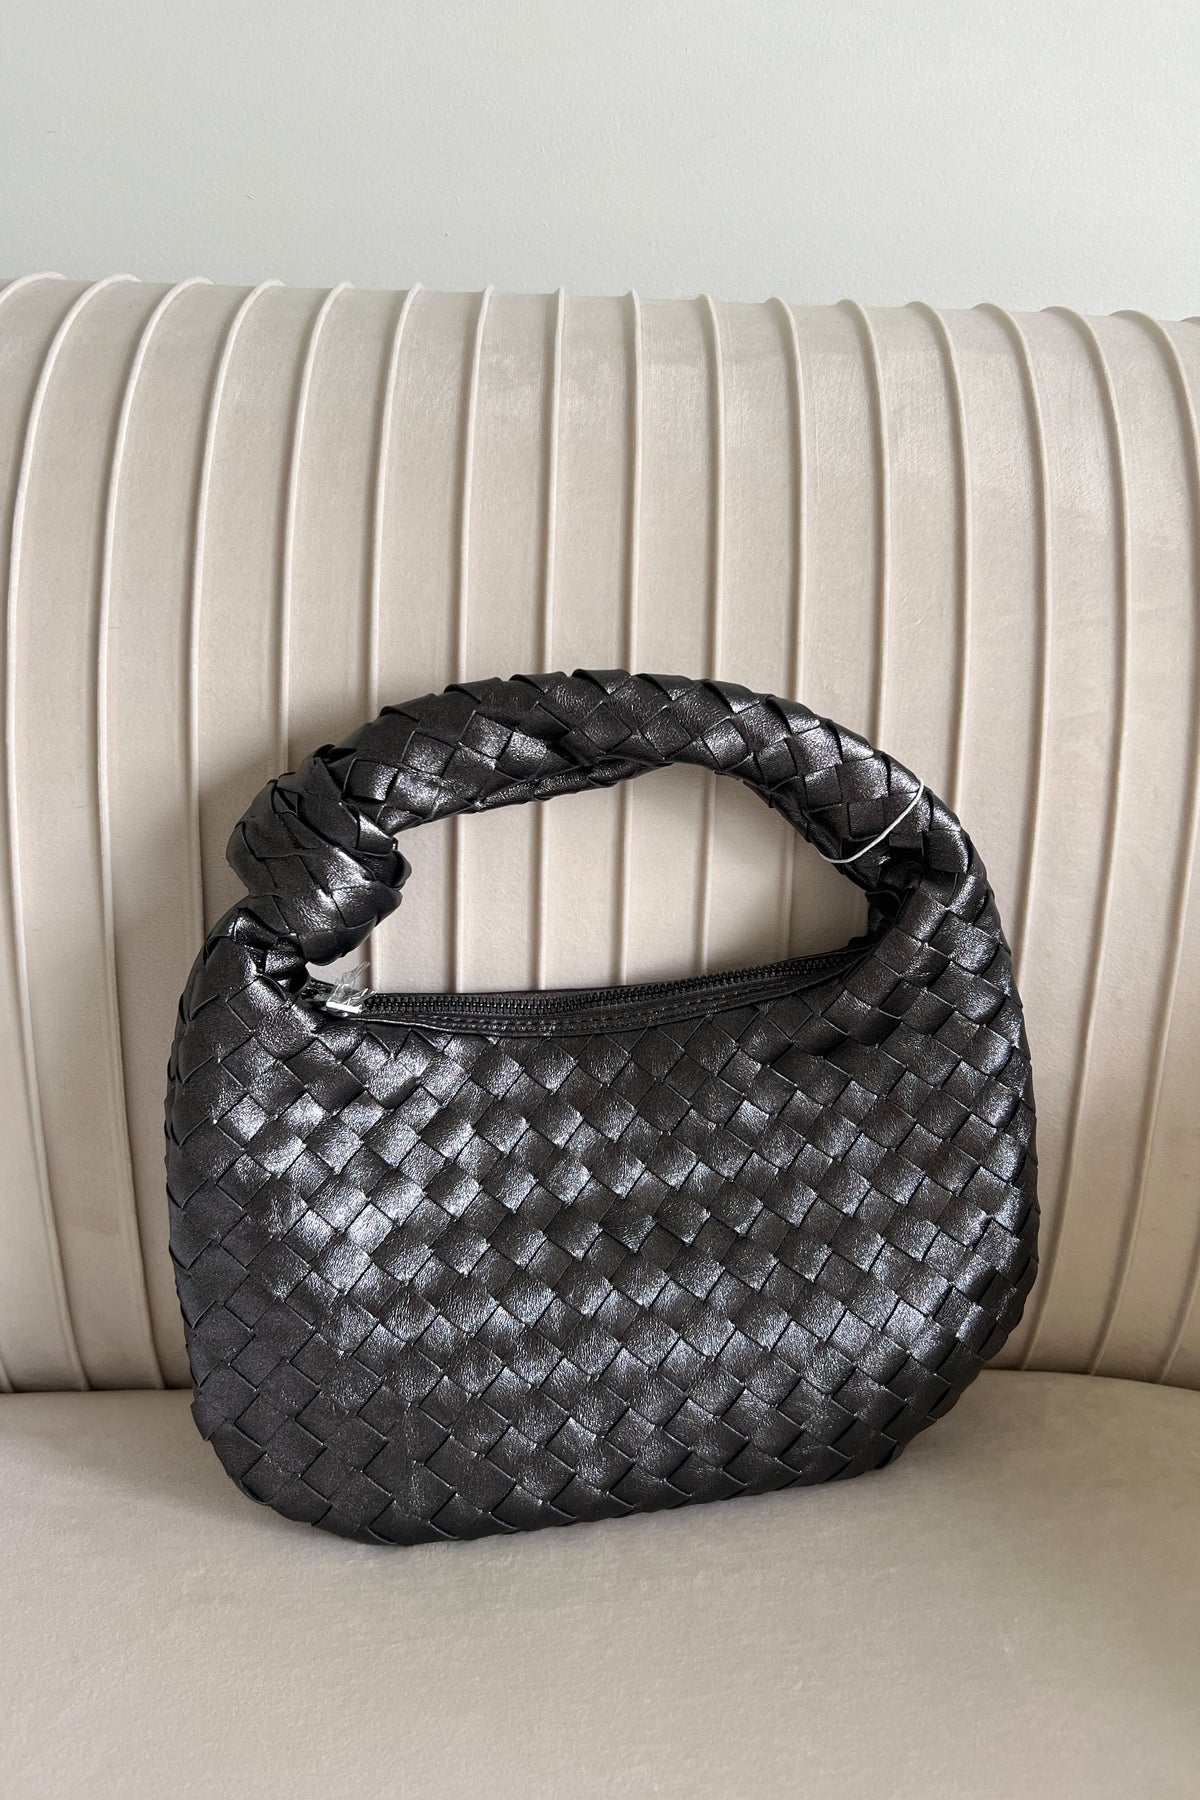 Mini Studded Decor Square Bag Black Fashionable For Daily